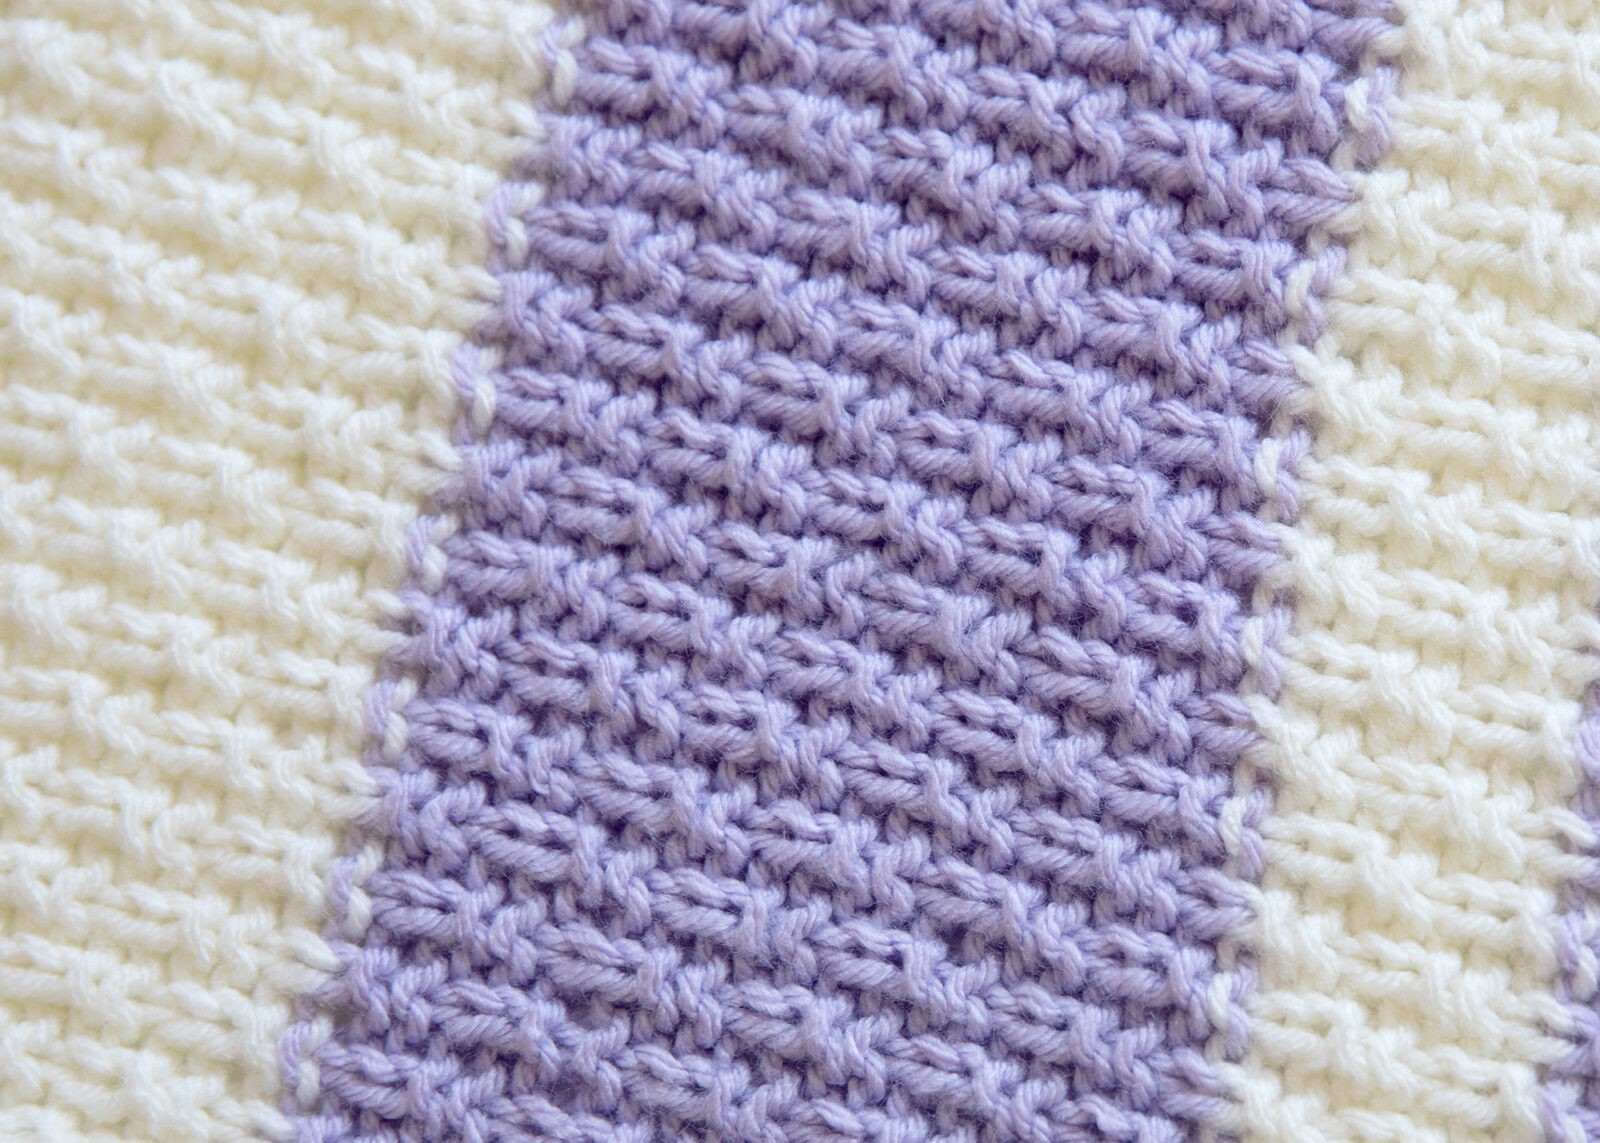 Easy Knit Baby Blanket Pattern